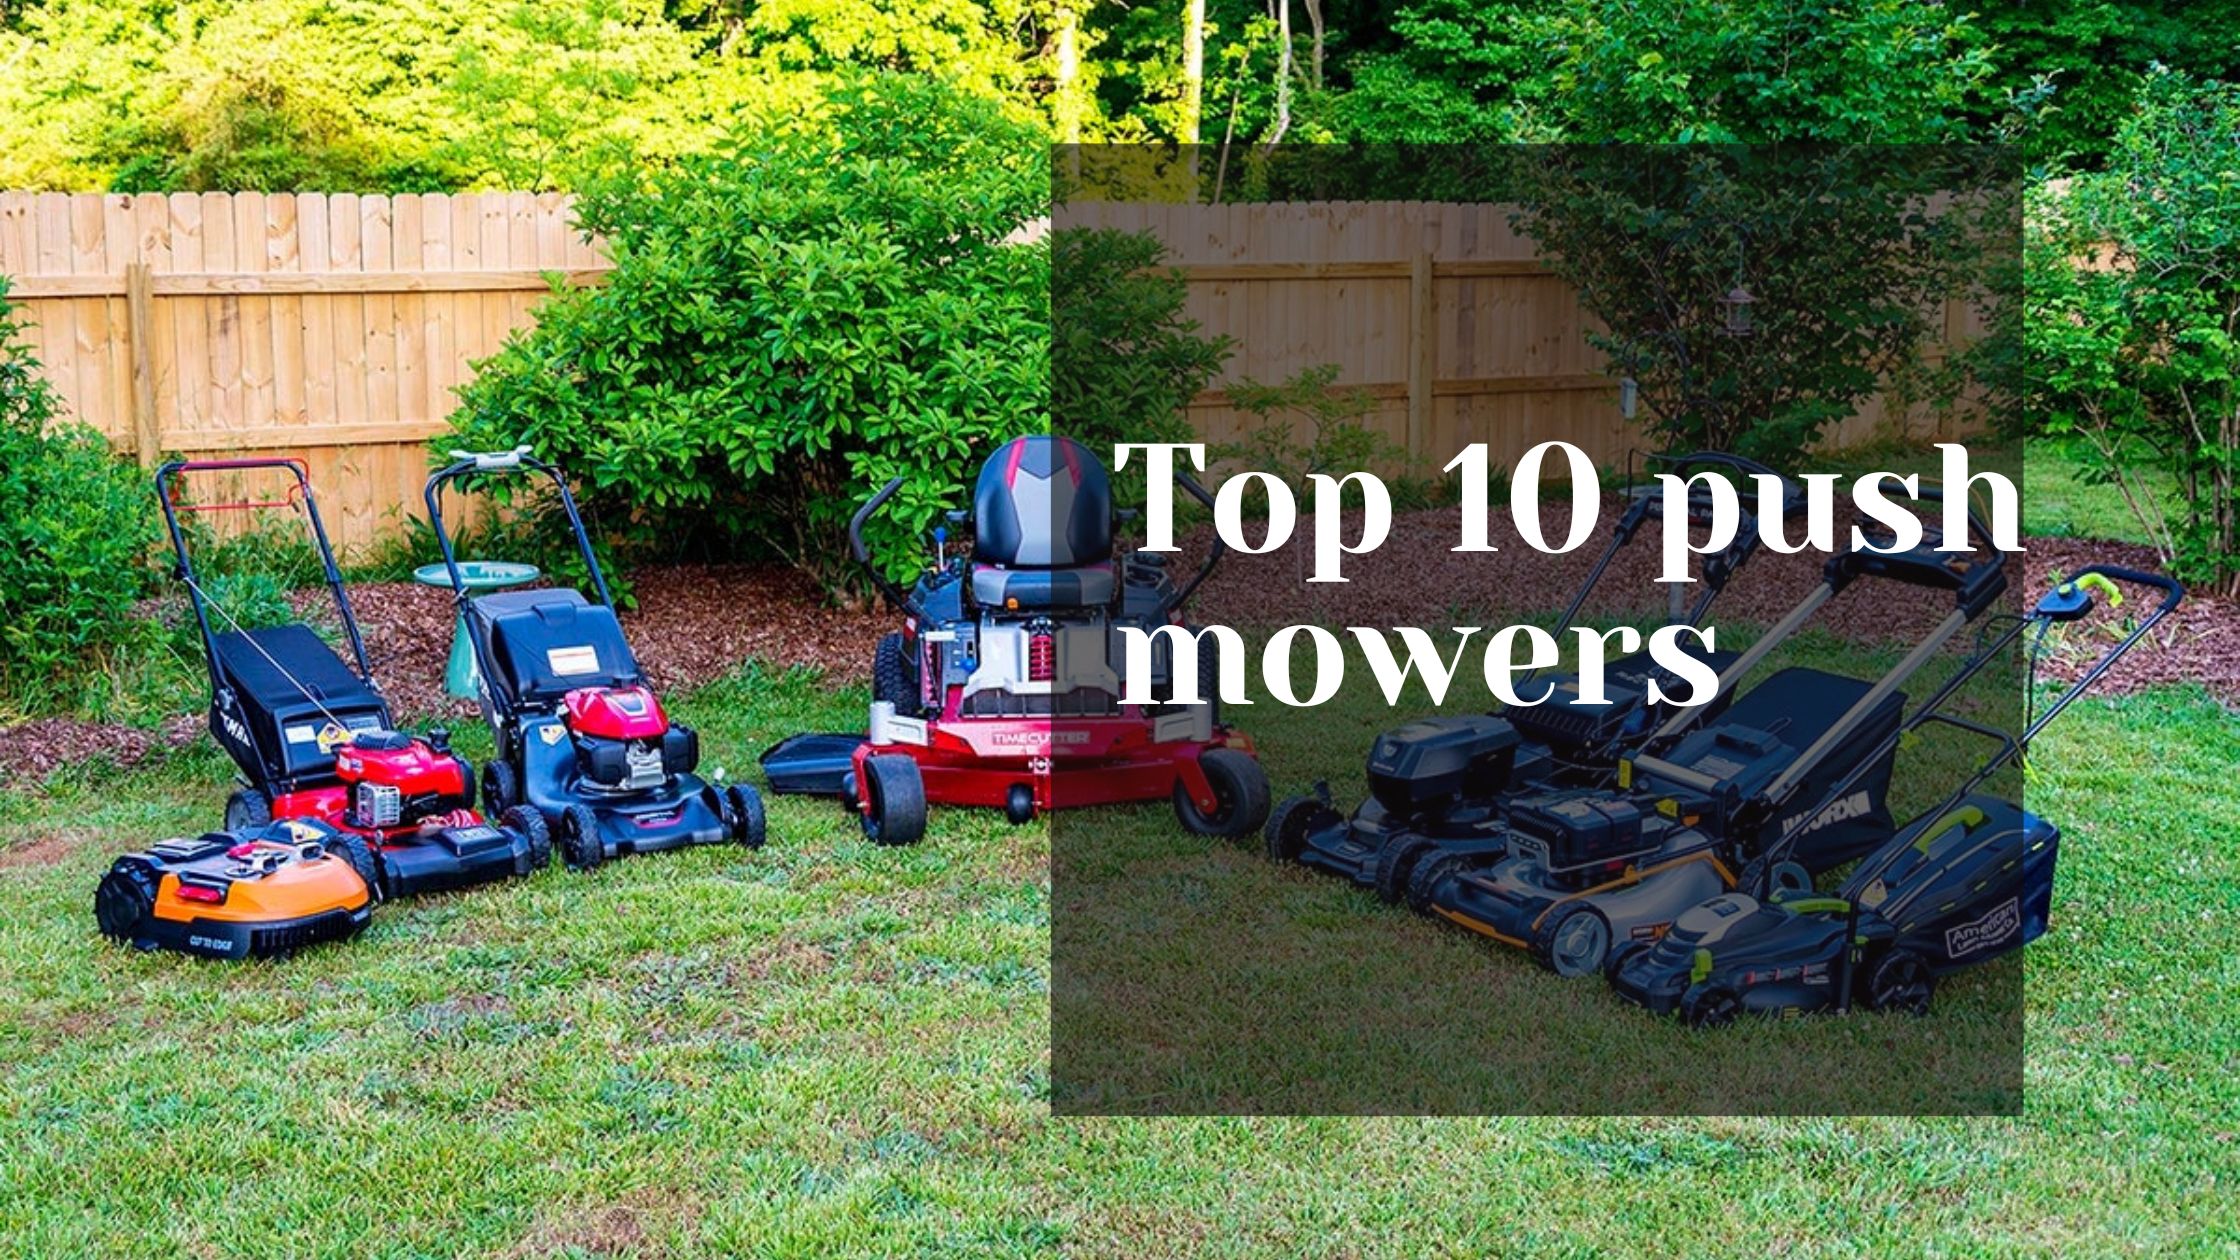 Top 10 push mowers